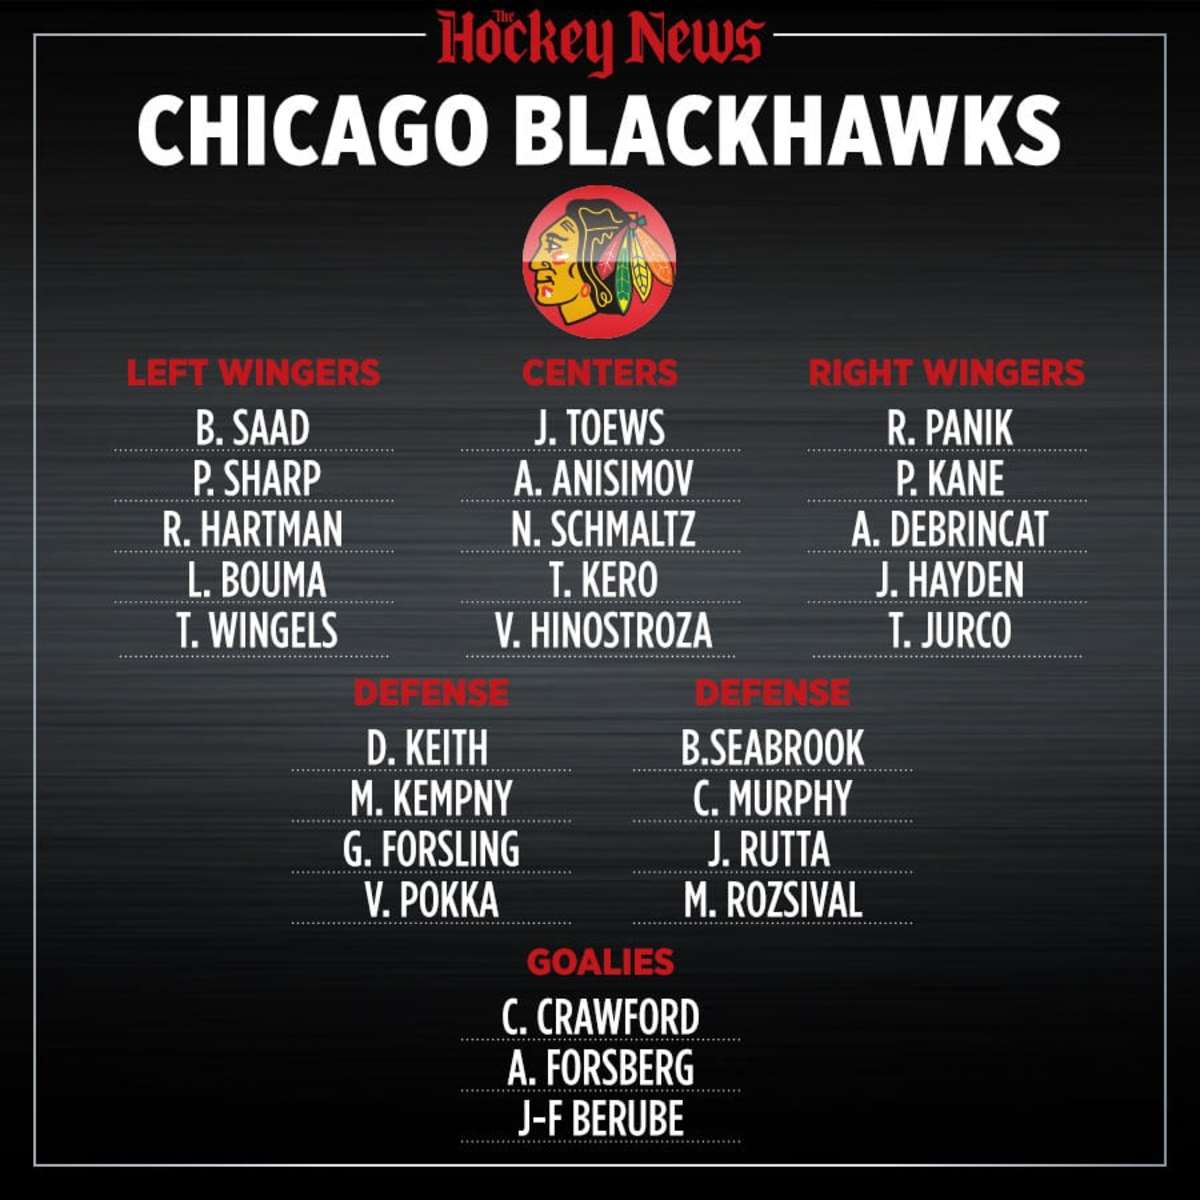 Chicago Blackhawks Depth Chart